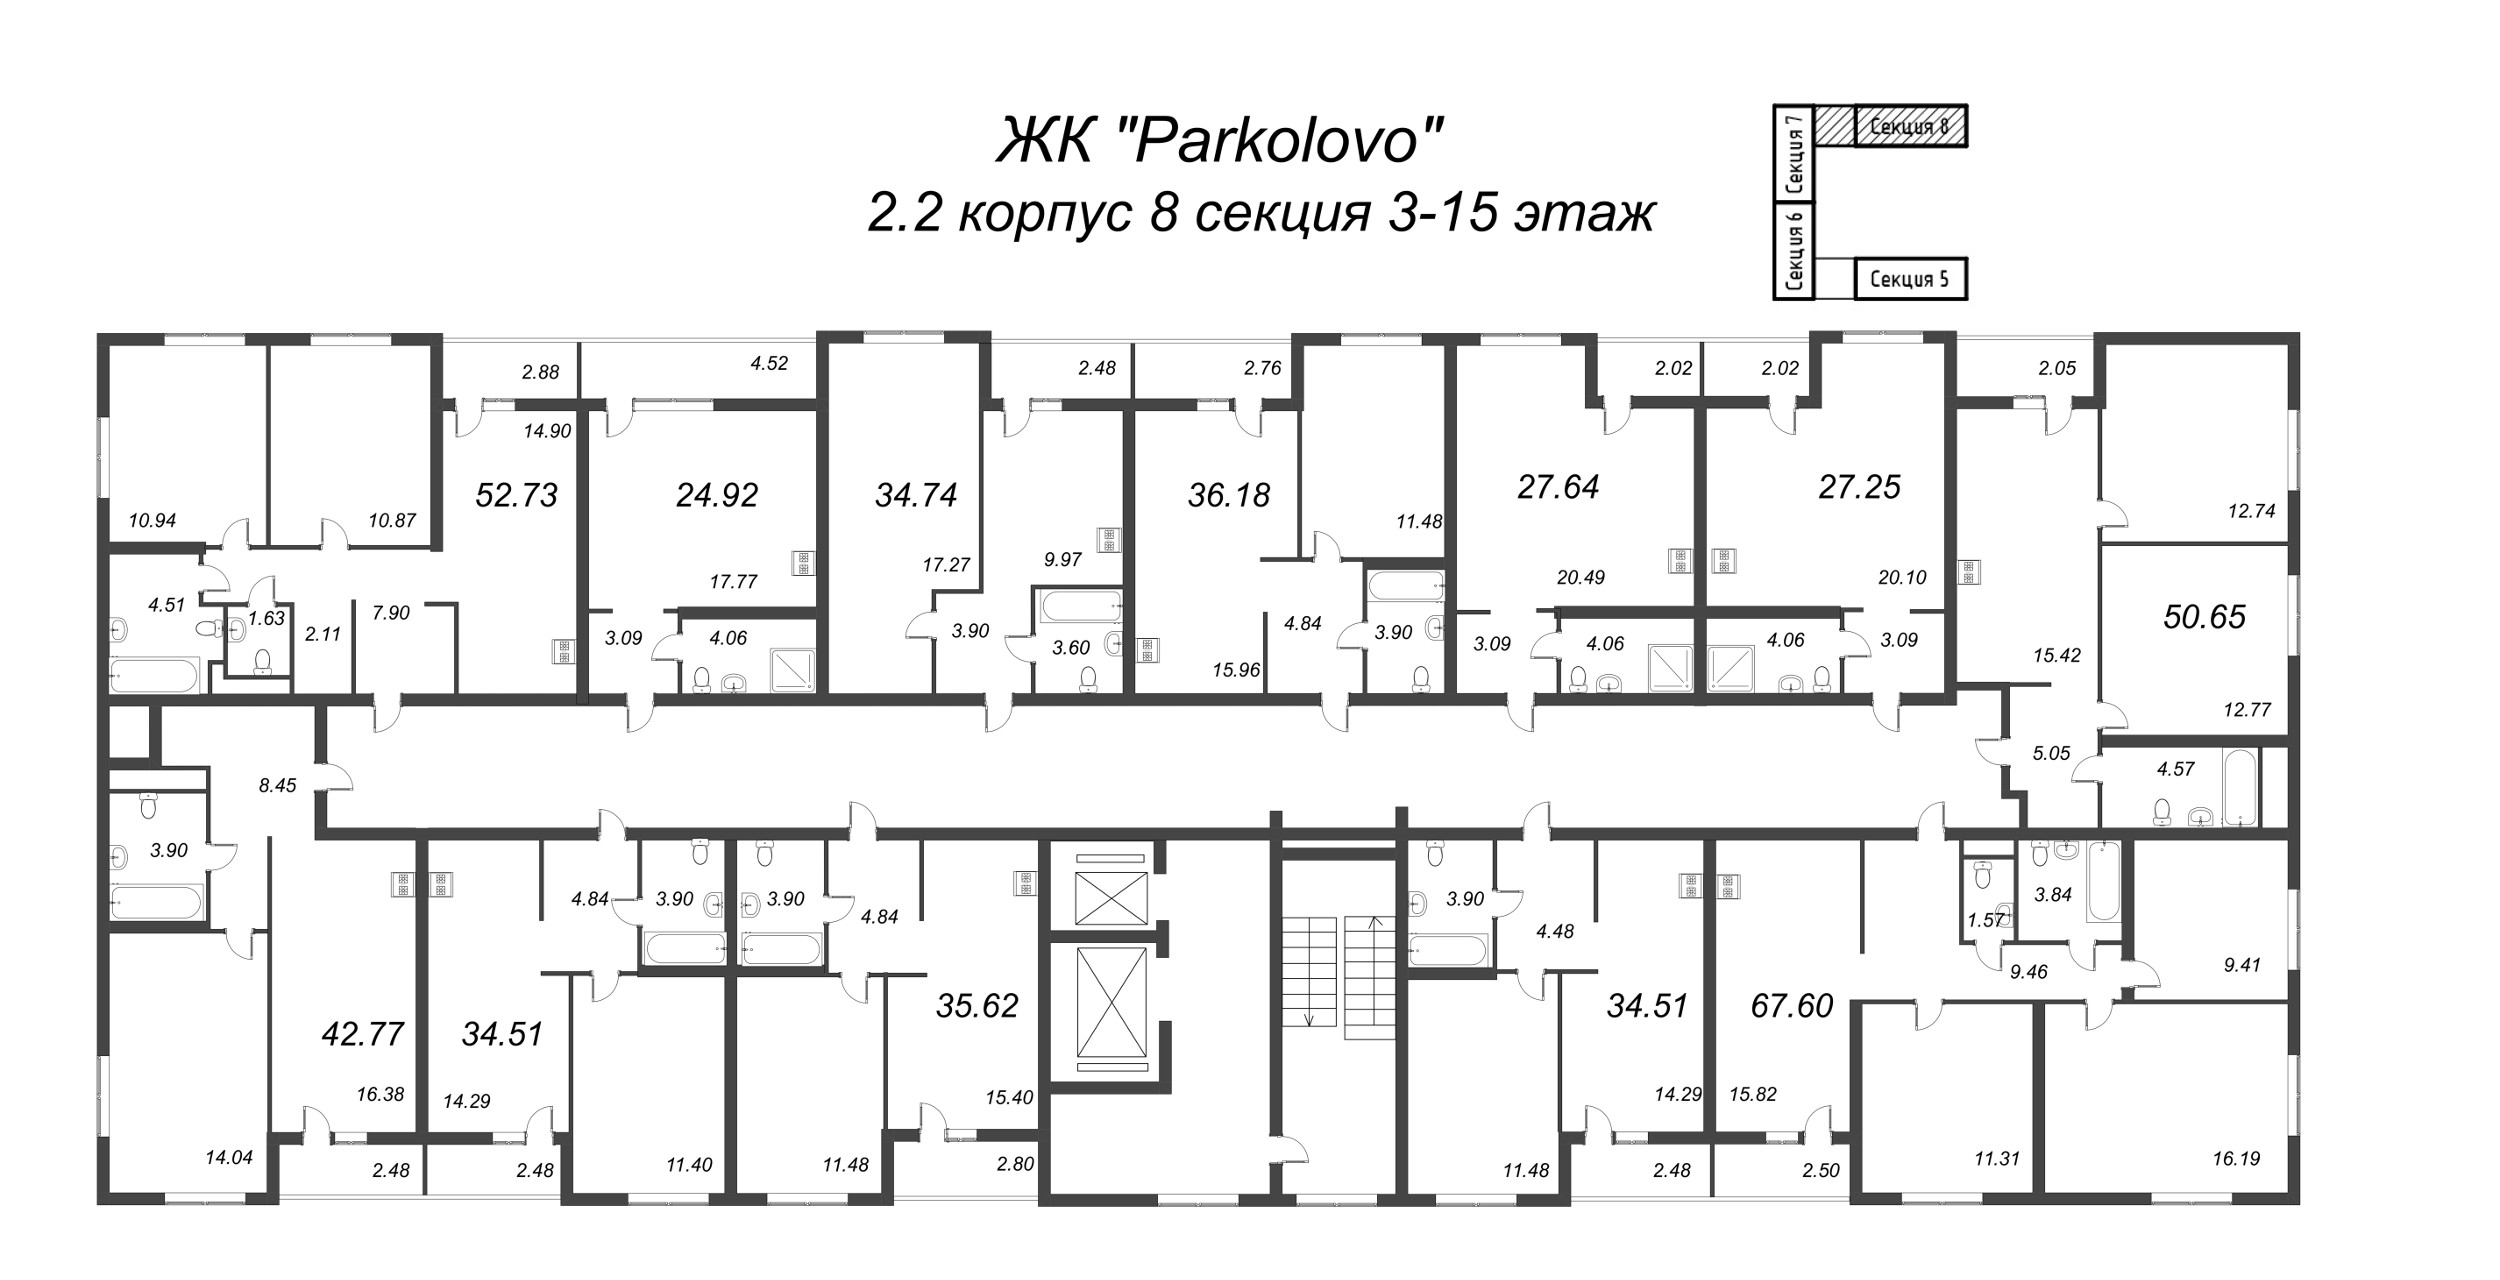 2-комнатная (Евро) квартира, 42.77 м² - планировка этажа